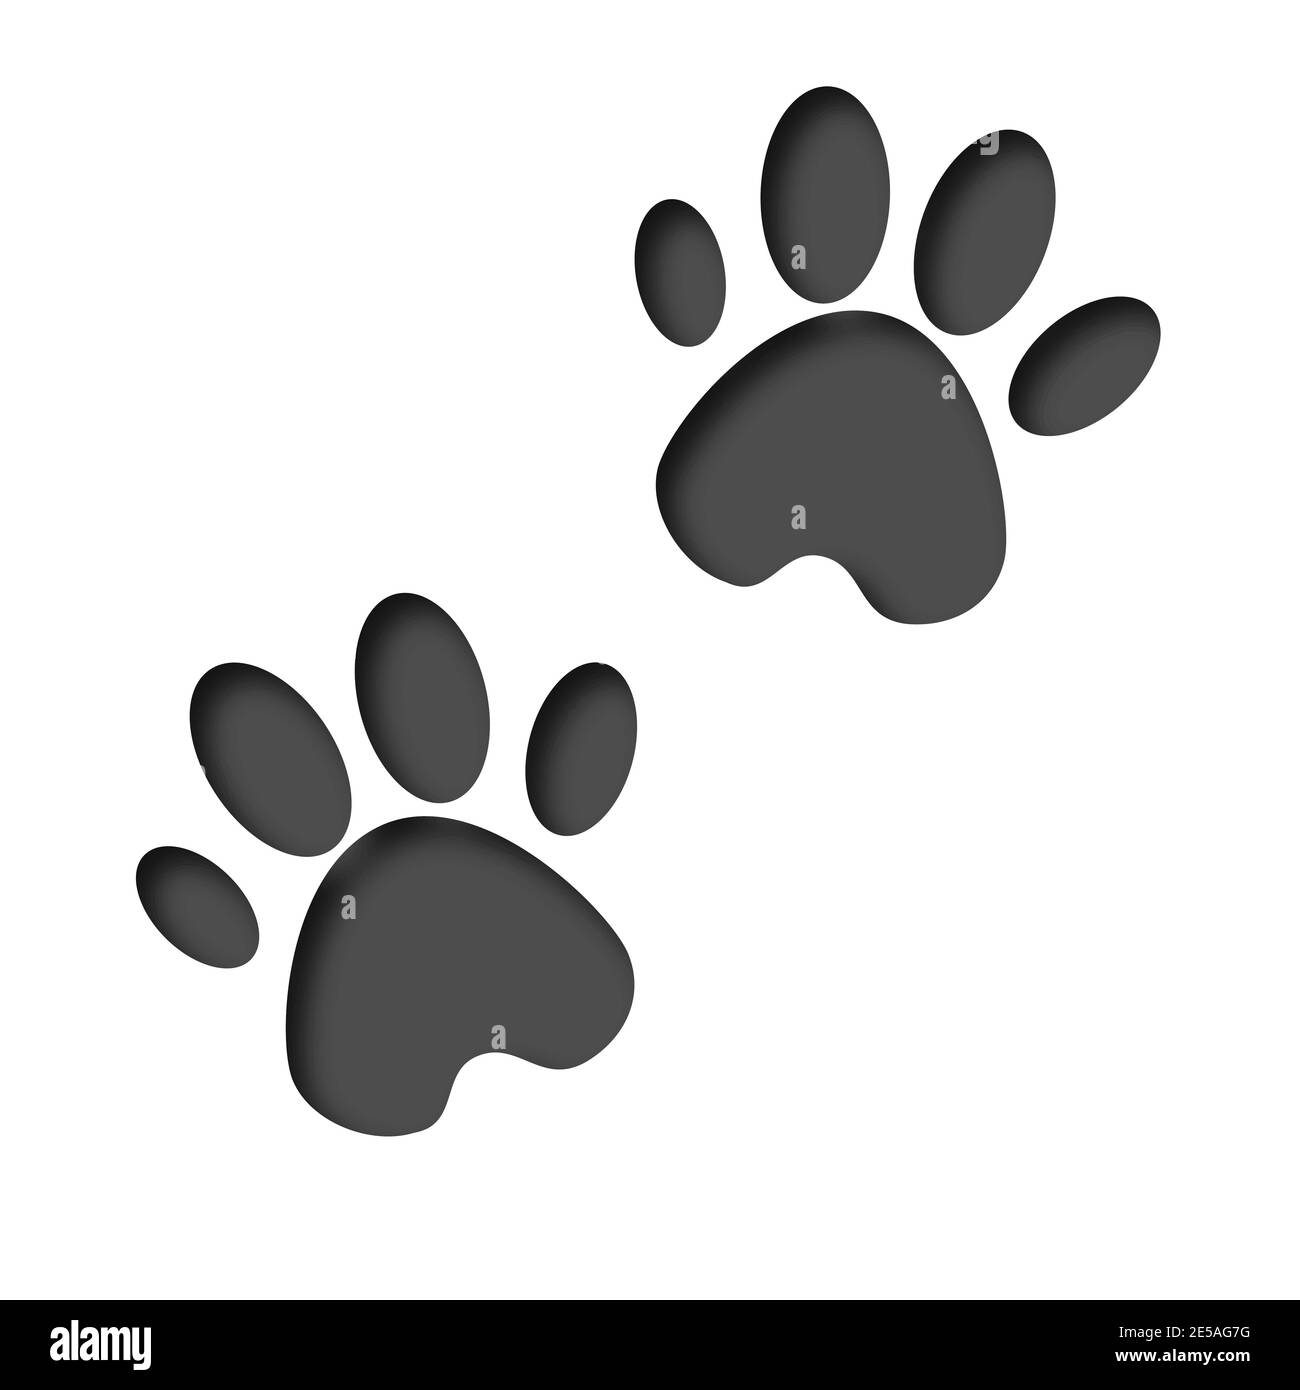 3D illustration. Animals footprint. Footprint dog or cat in flat design. Pow print animals Stock Vector